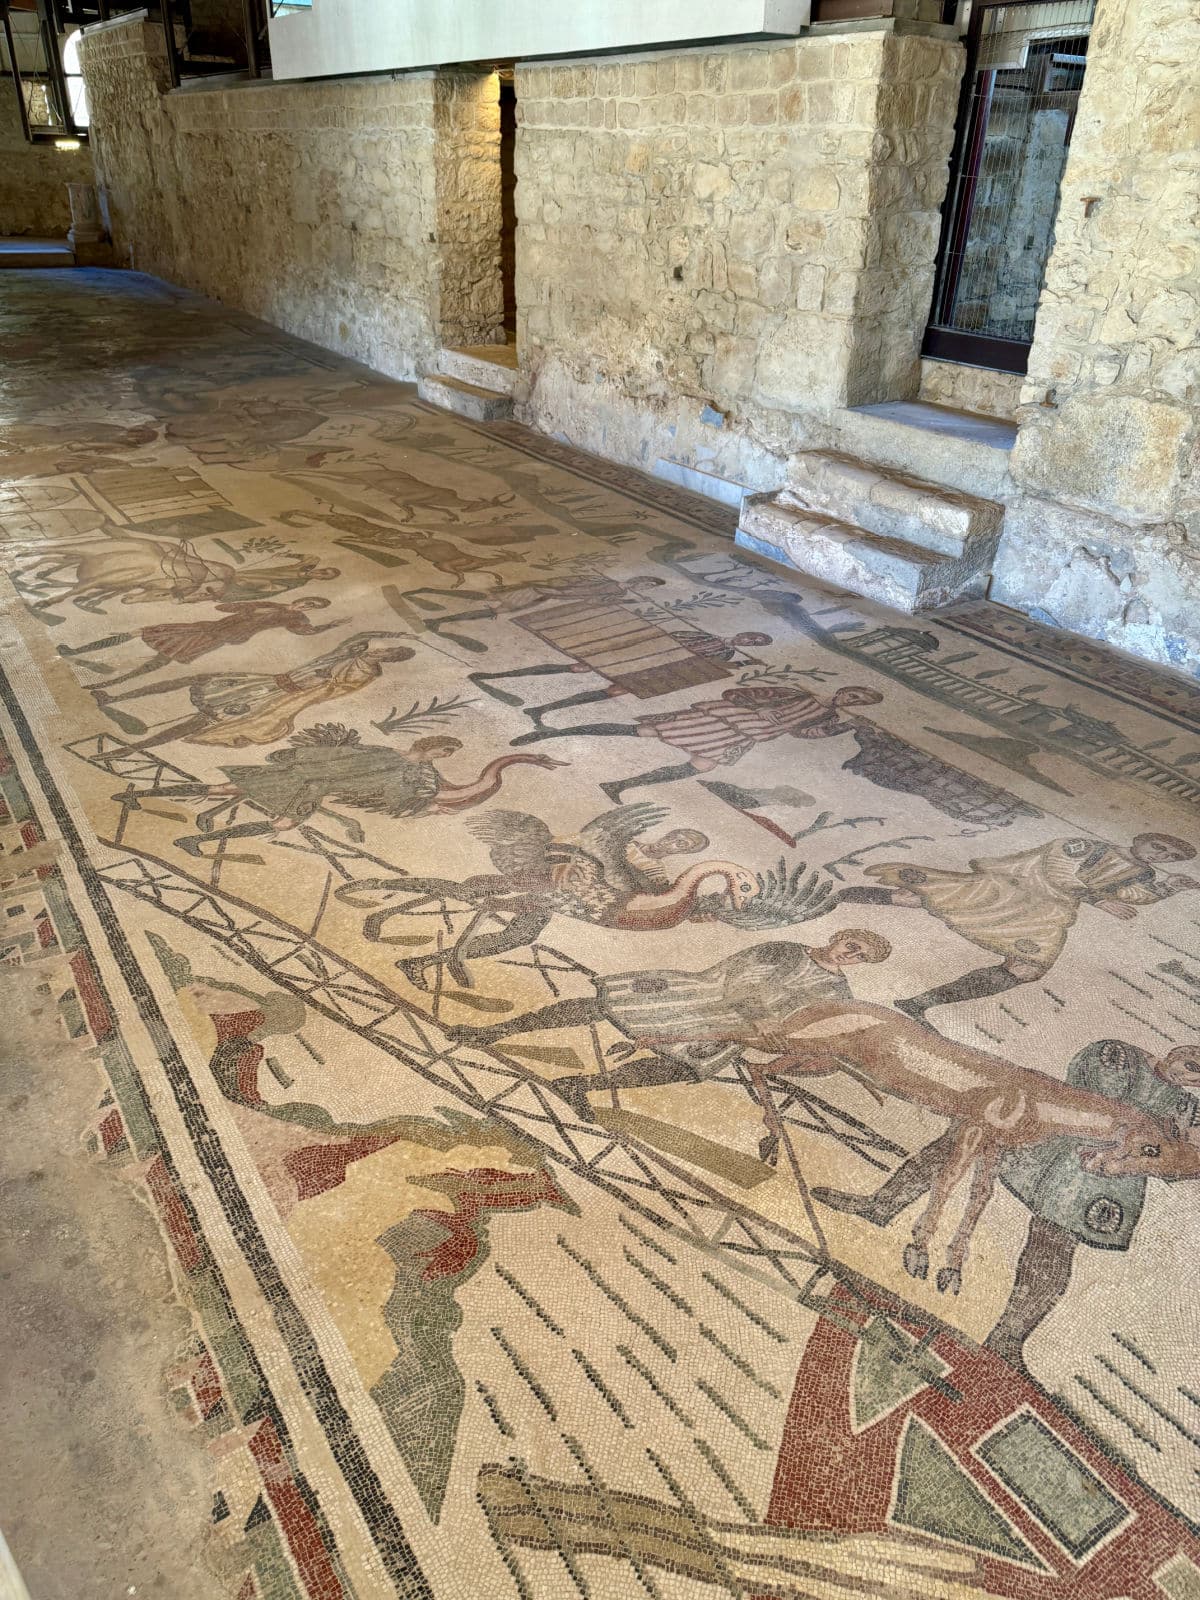 Mosaic on floor in Sicily Italy.